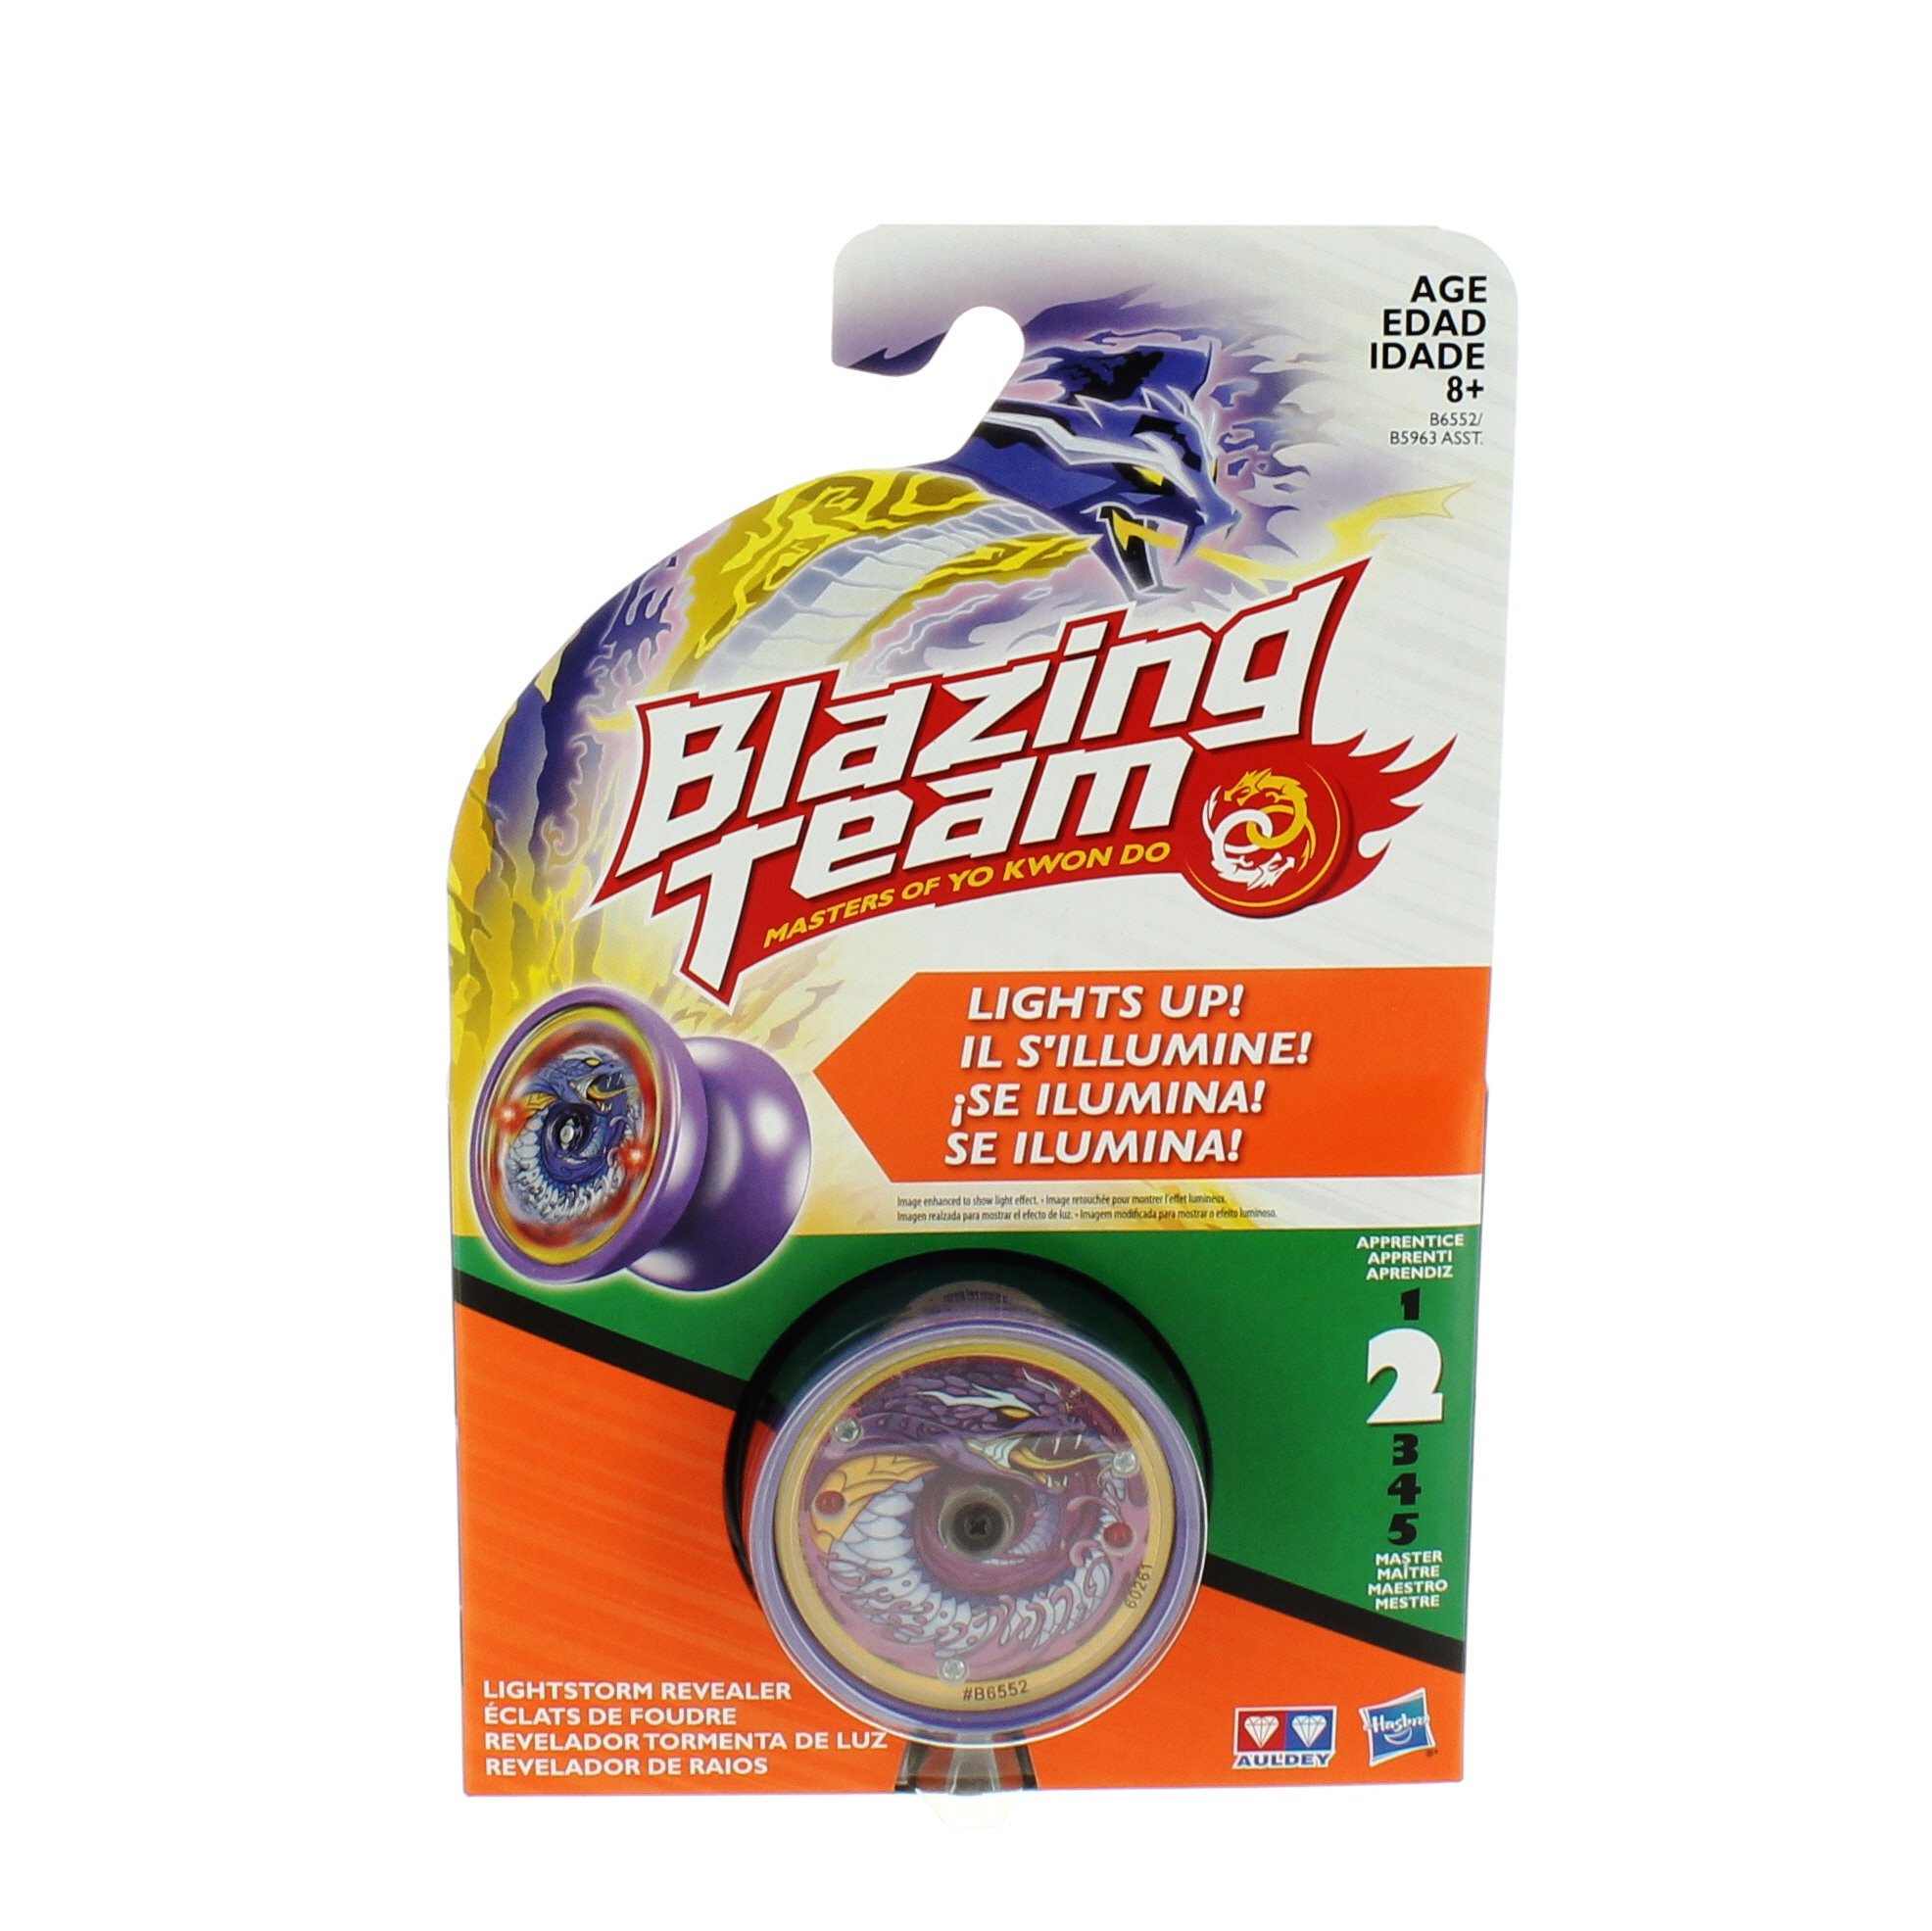 Blazing Team Lightstorm Revealer Eagle Yo-yo Hasbro Light up Yellow Apprentice 2 for sale online 